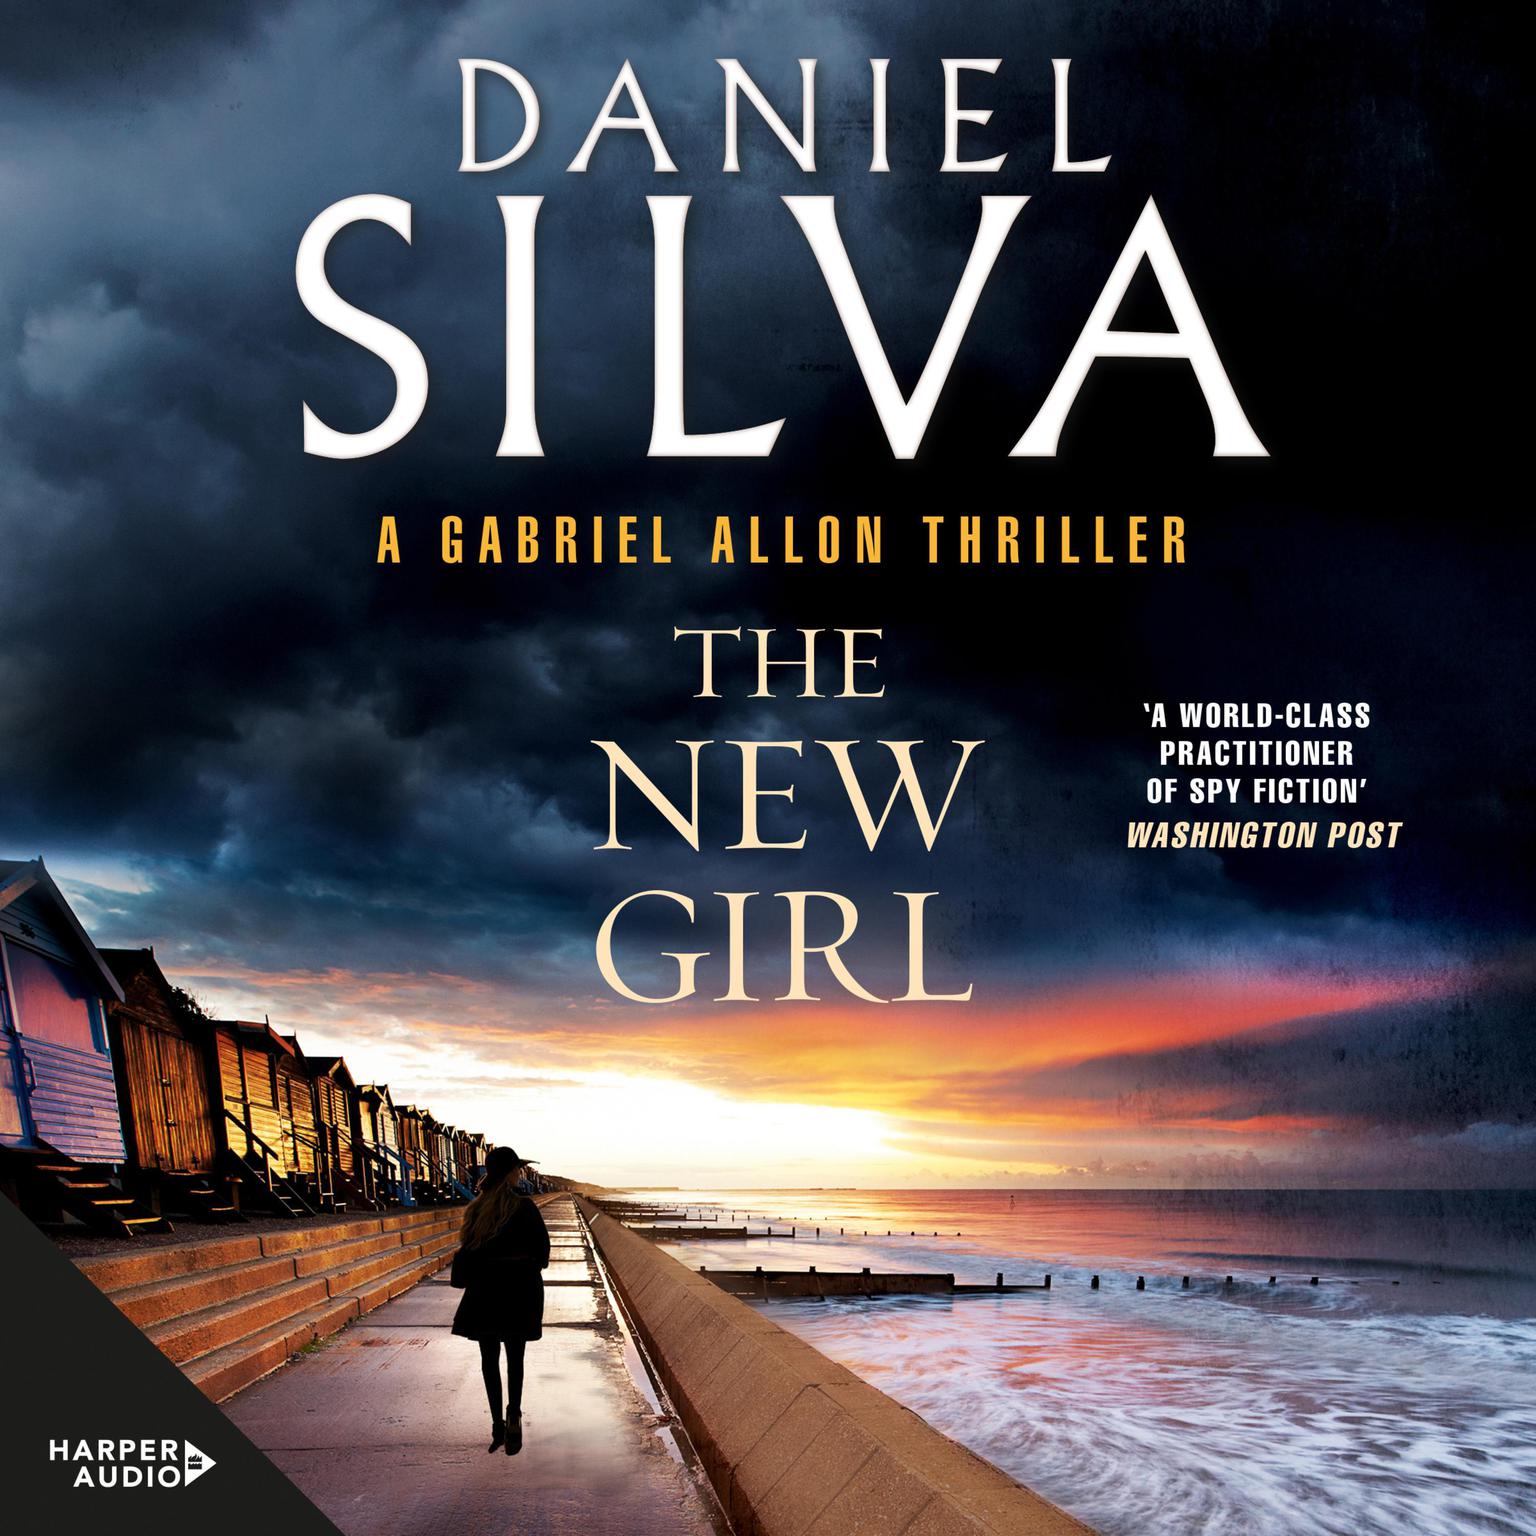 The New Girl: A Novel Audiobook, by Daniel Silva